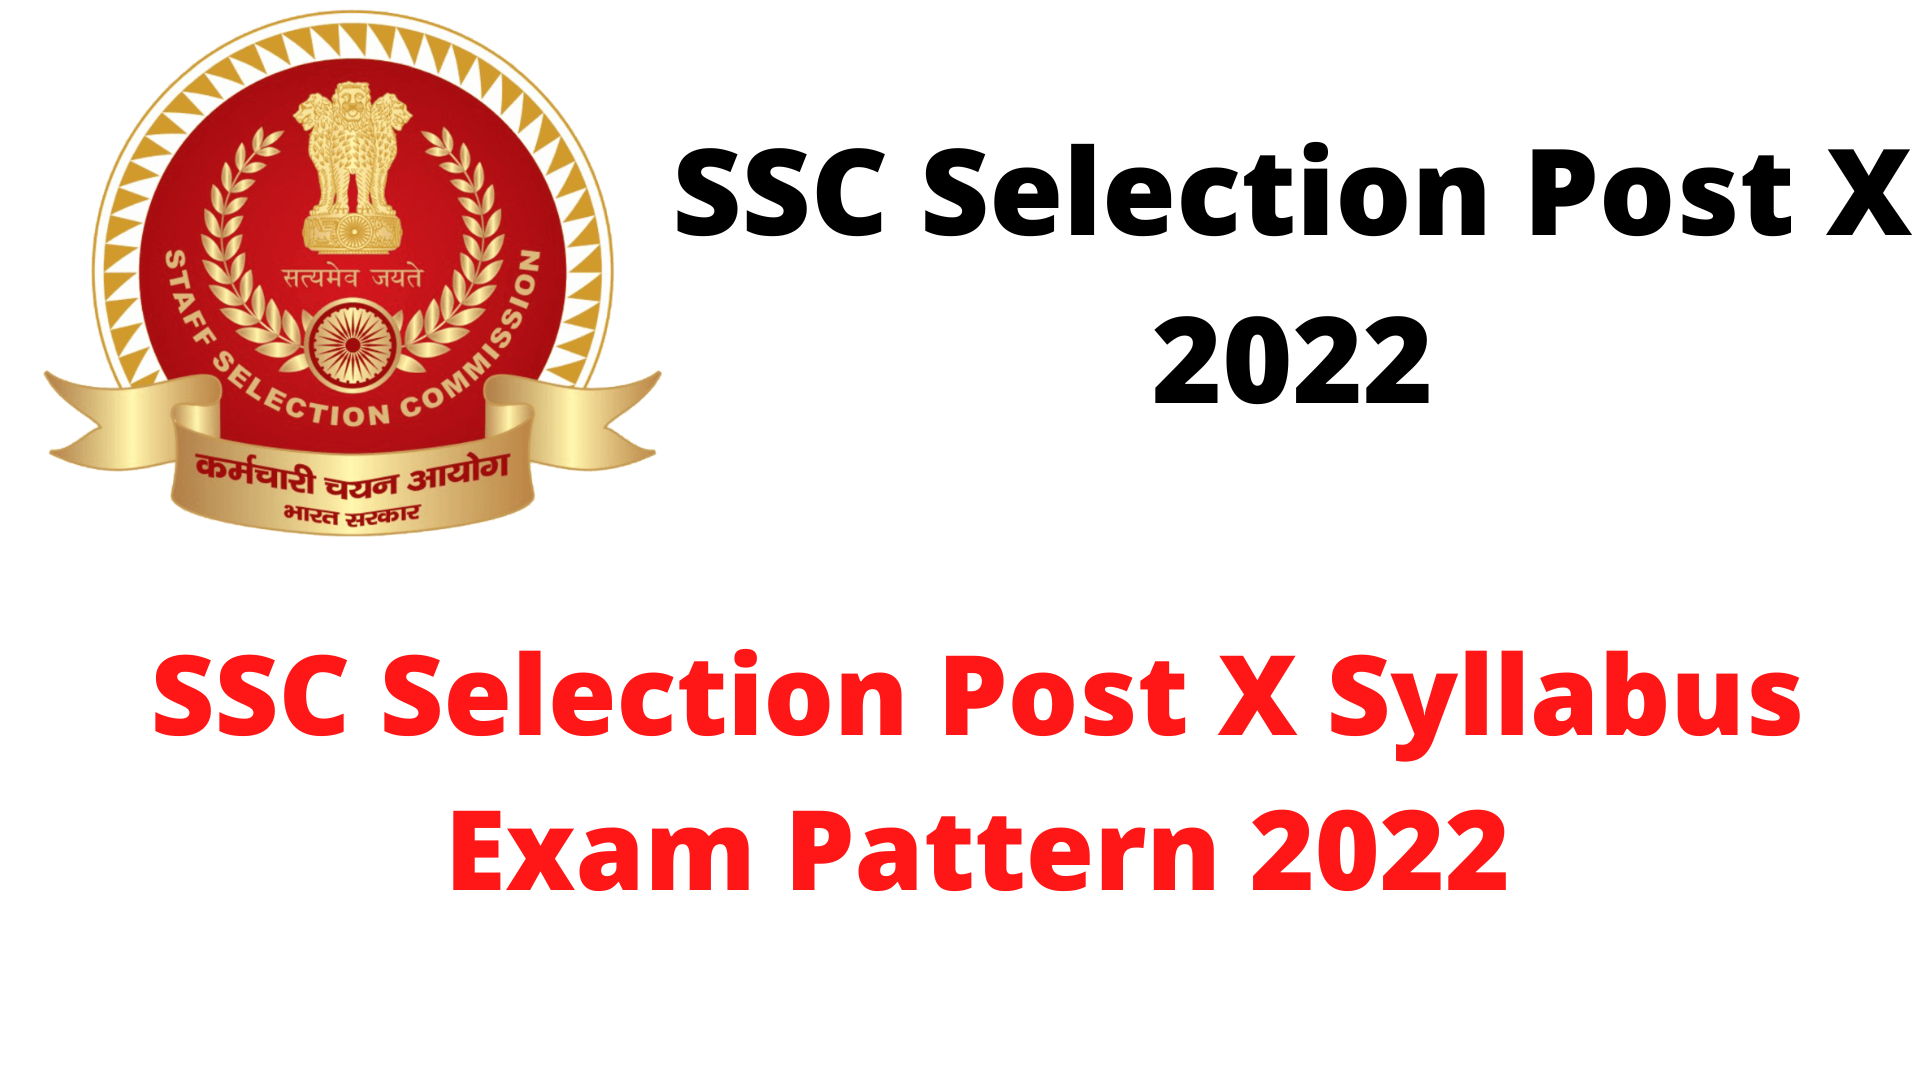 SSC Selection Post X Syllabus Exam Pattern 2022